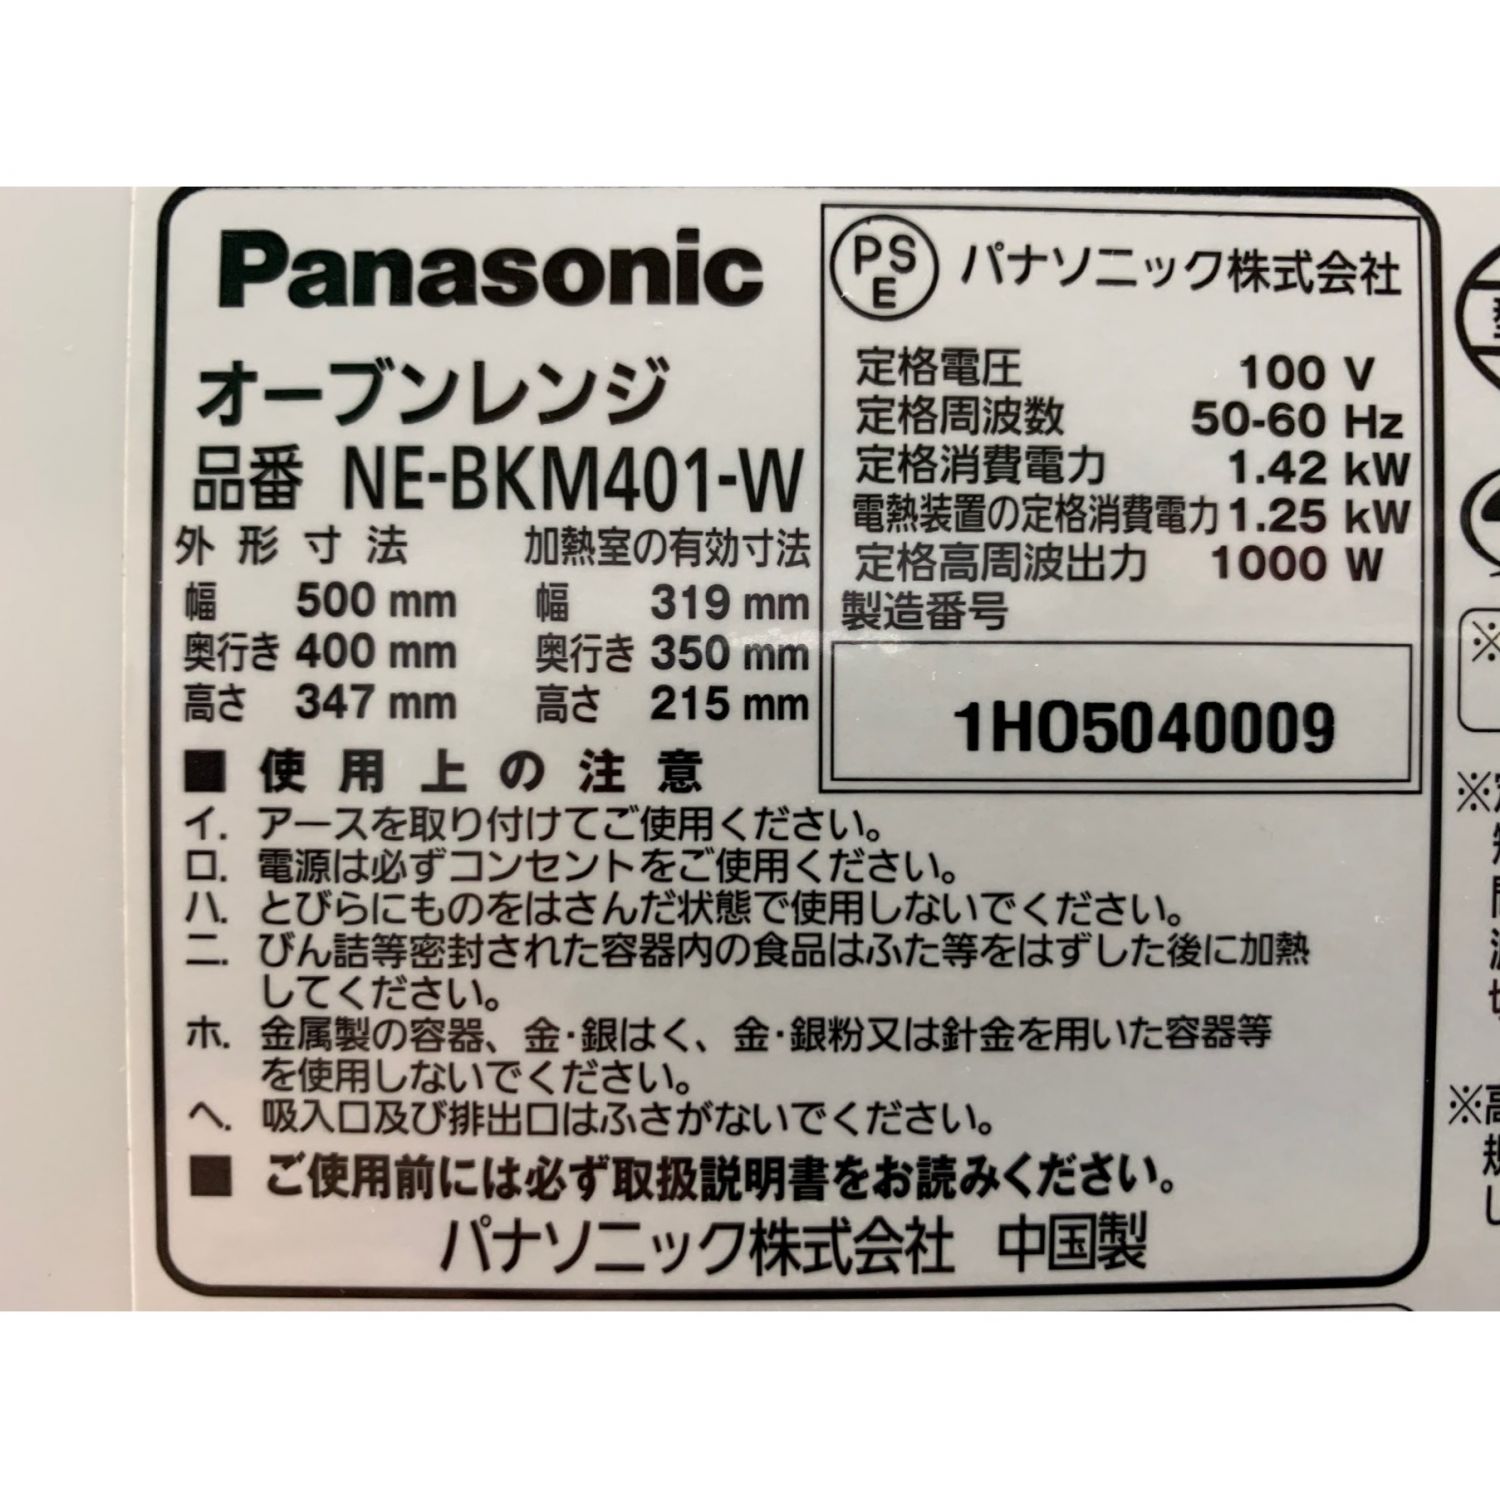 Panasonic (パナソニック) 2015年製 1000W オーブンレンジ NE-BKM401-W